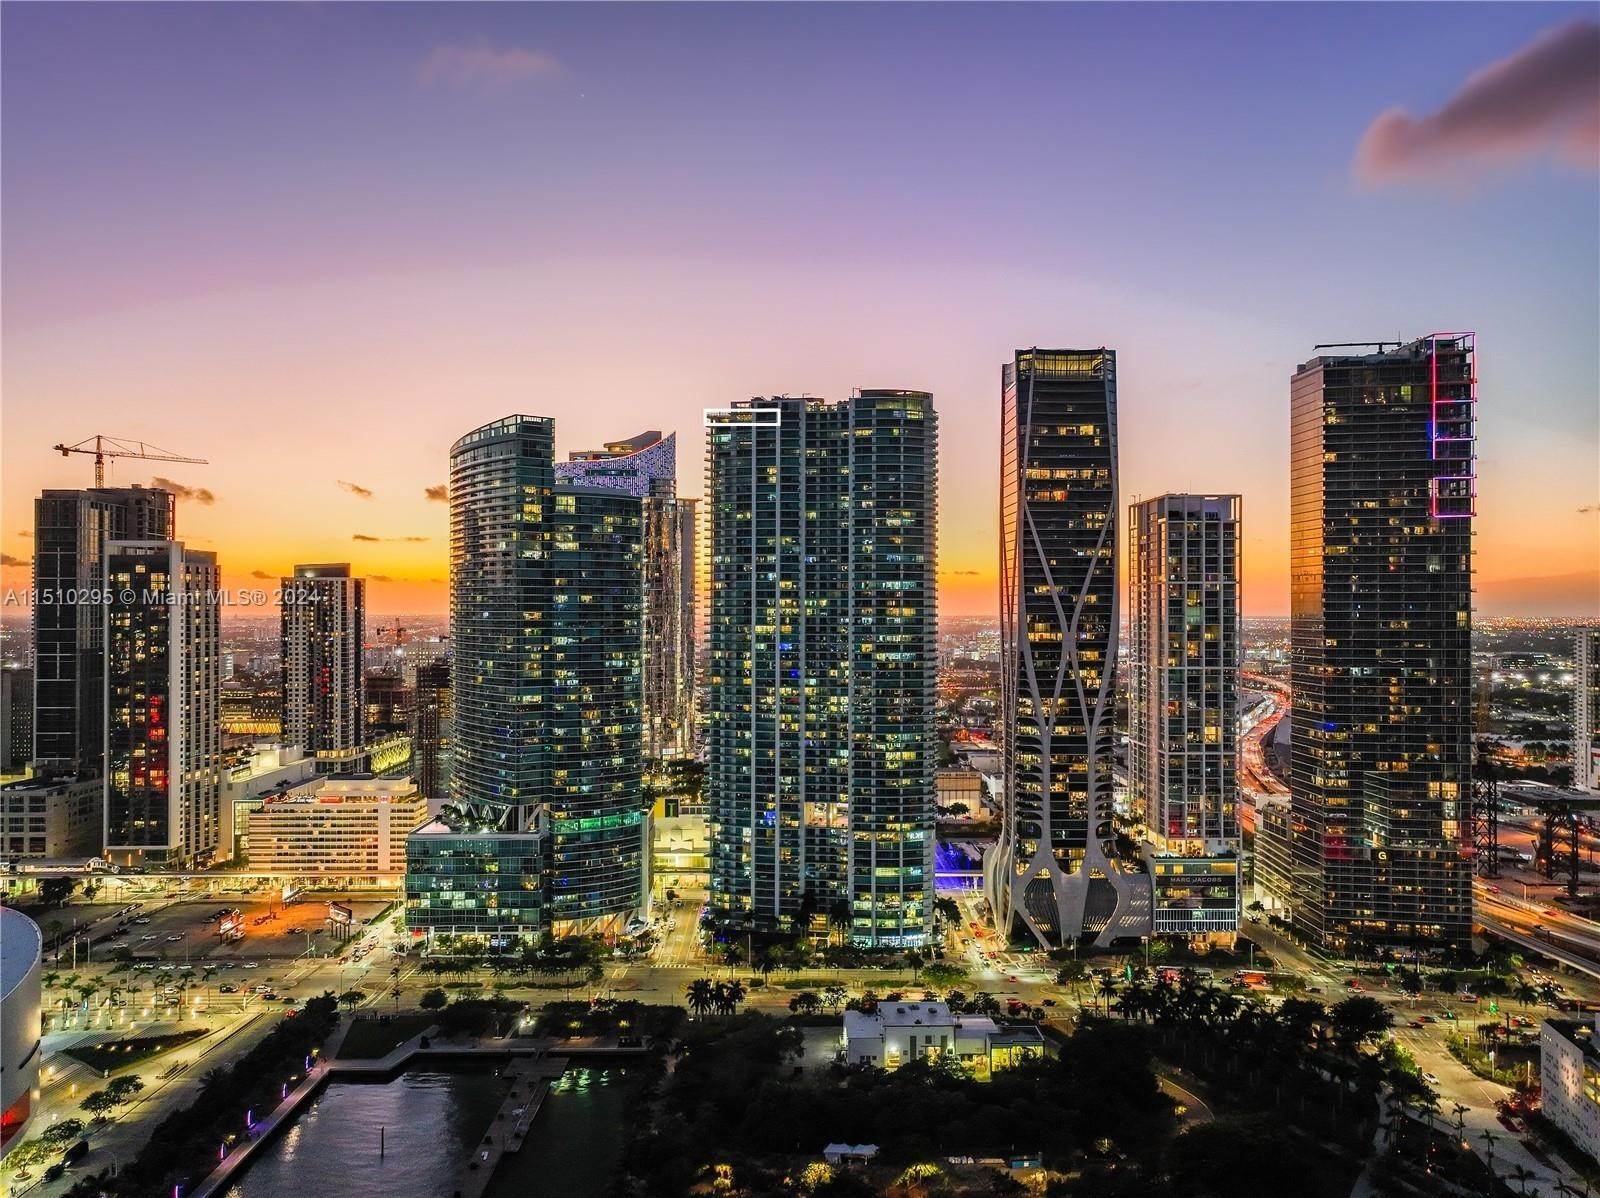 Condominium pour l Vente à Miami, FL 33132